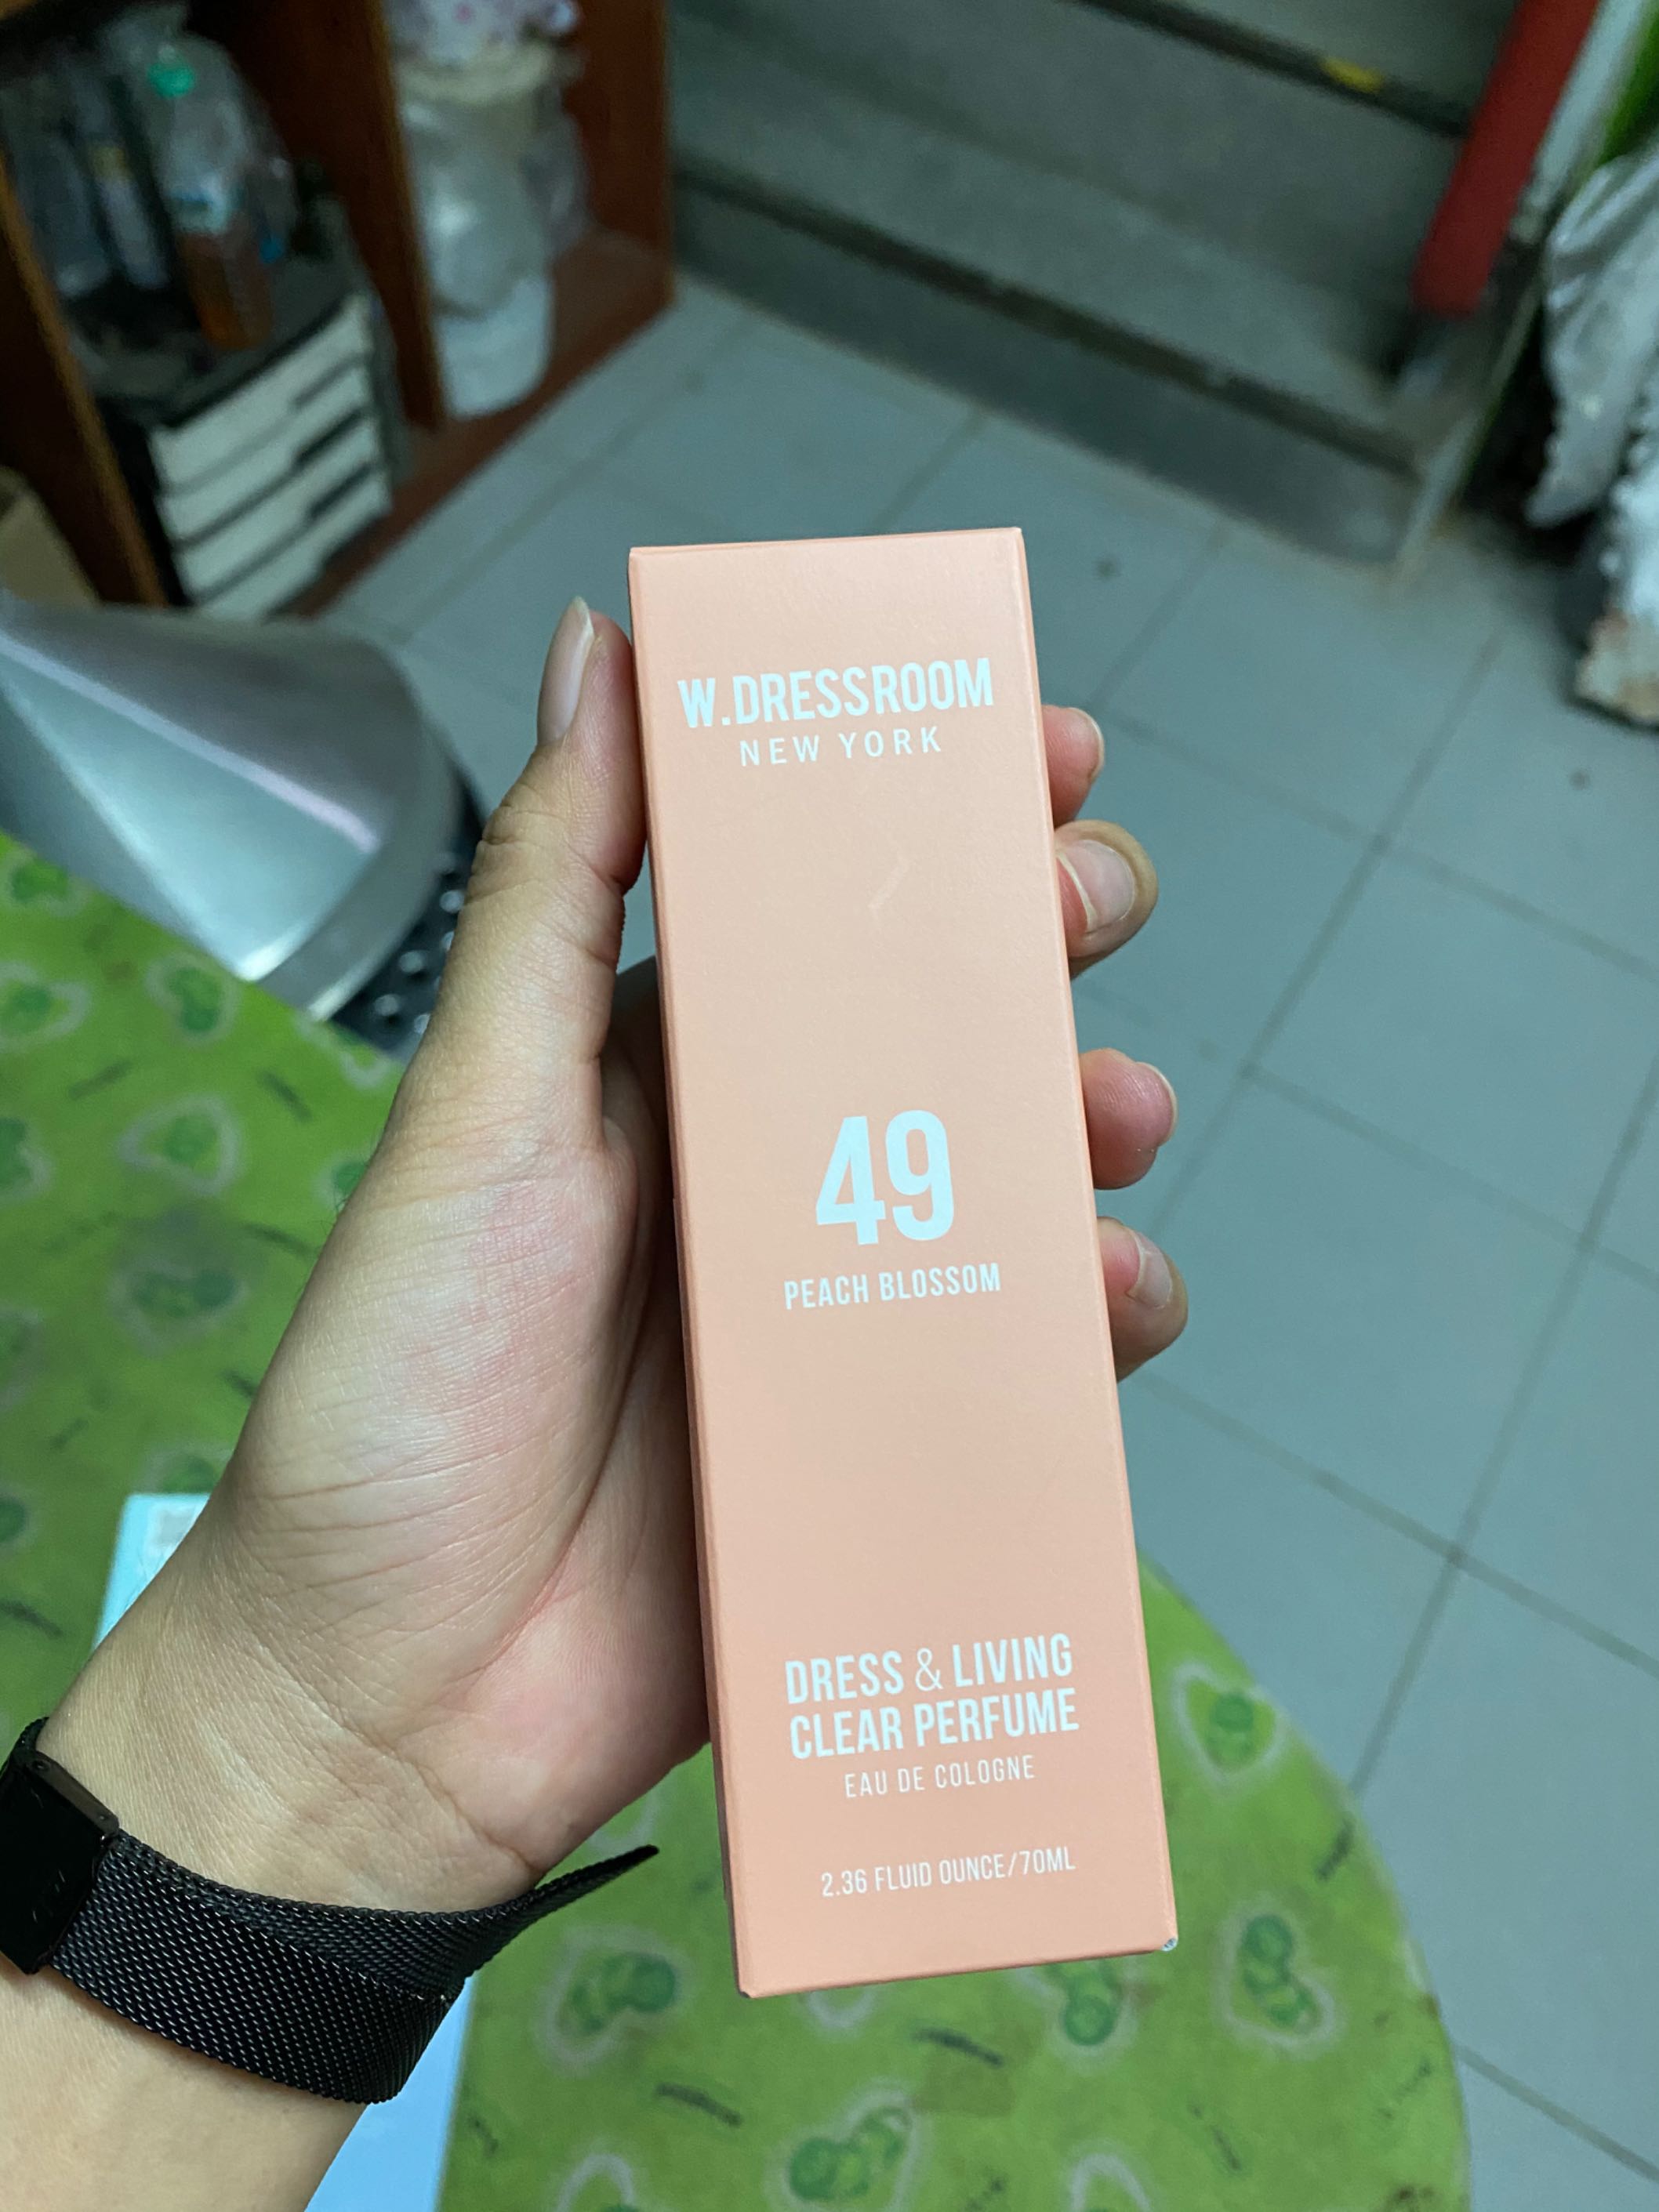 W.DRESSROOM Dress & Living Clear Perfume Portable 49 - Peach Blossom